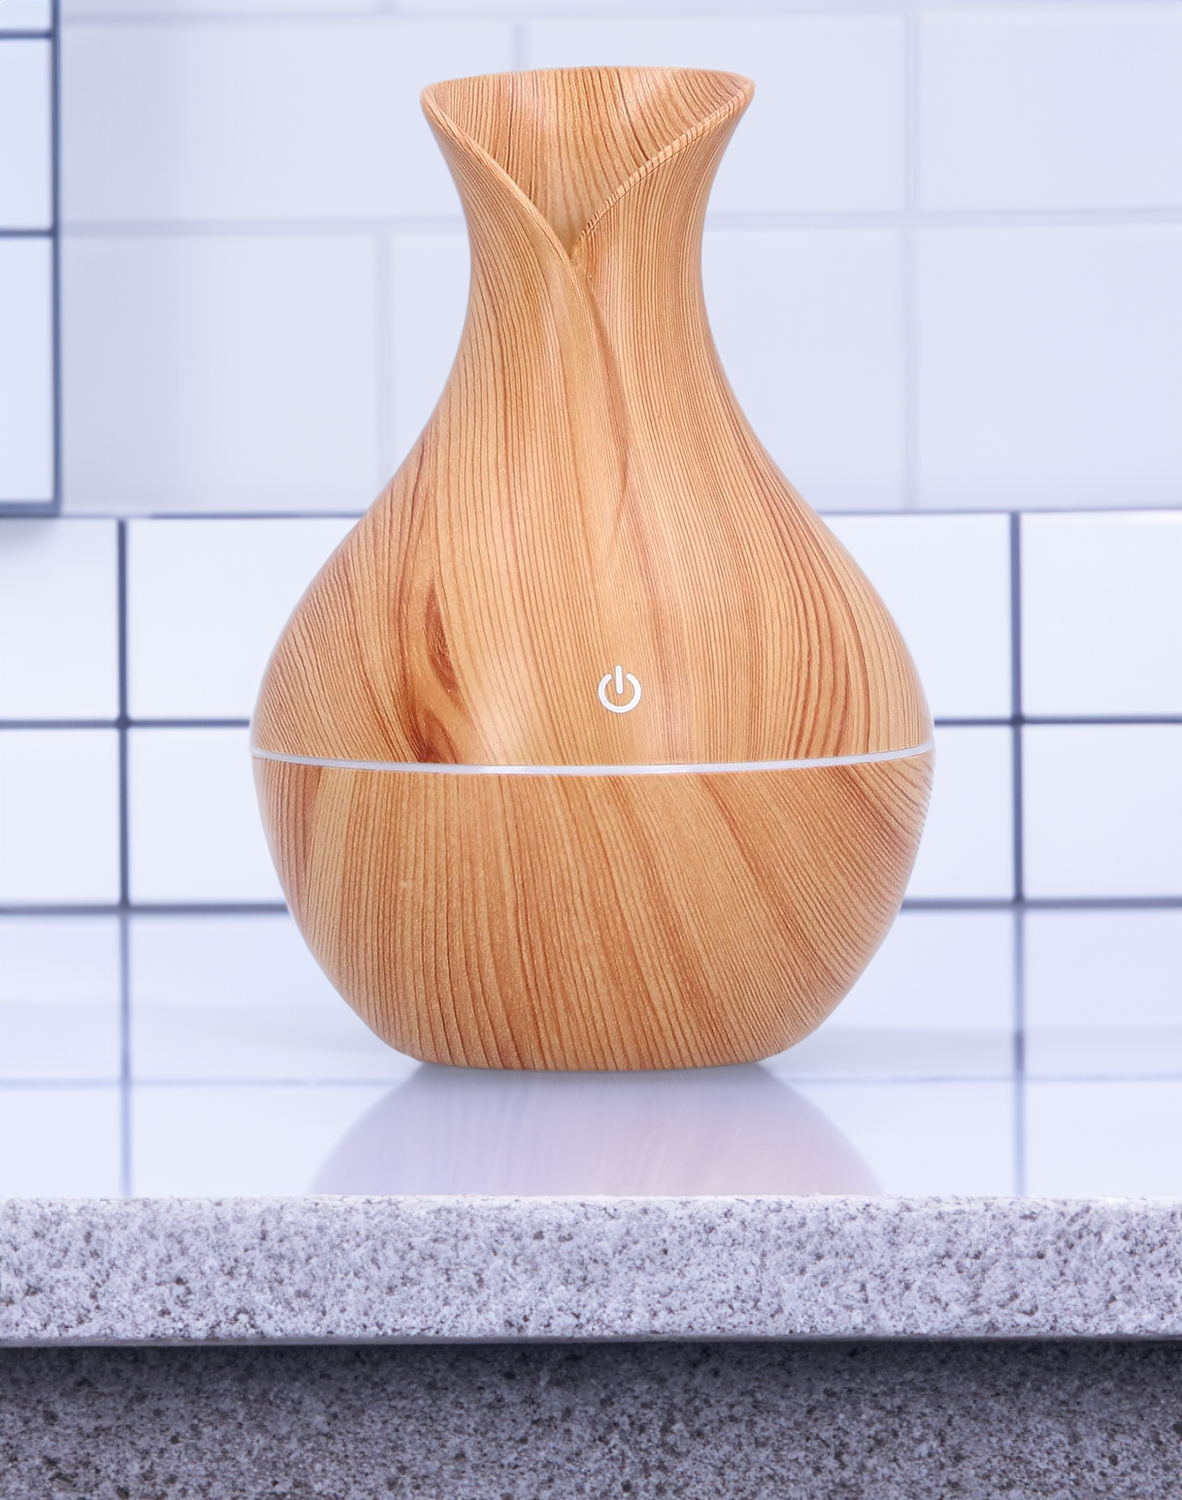 Wood Humidifier